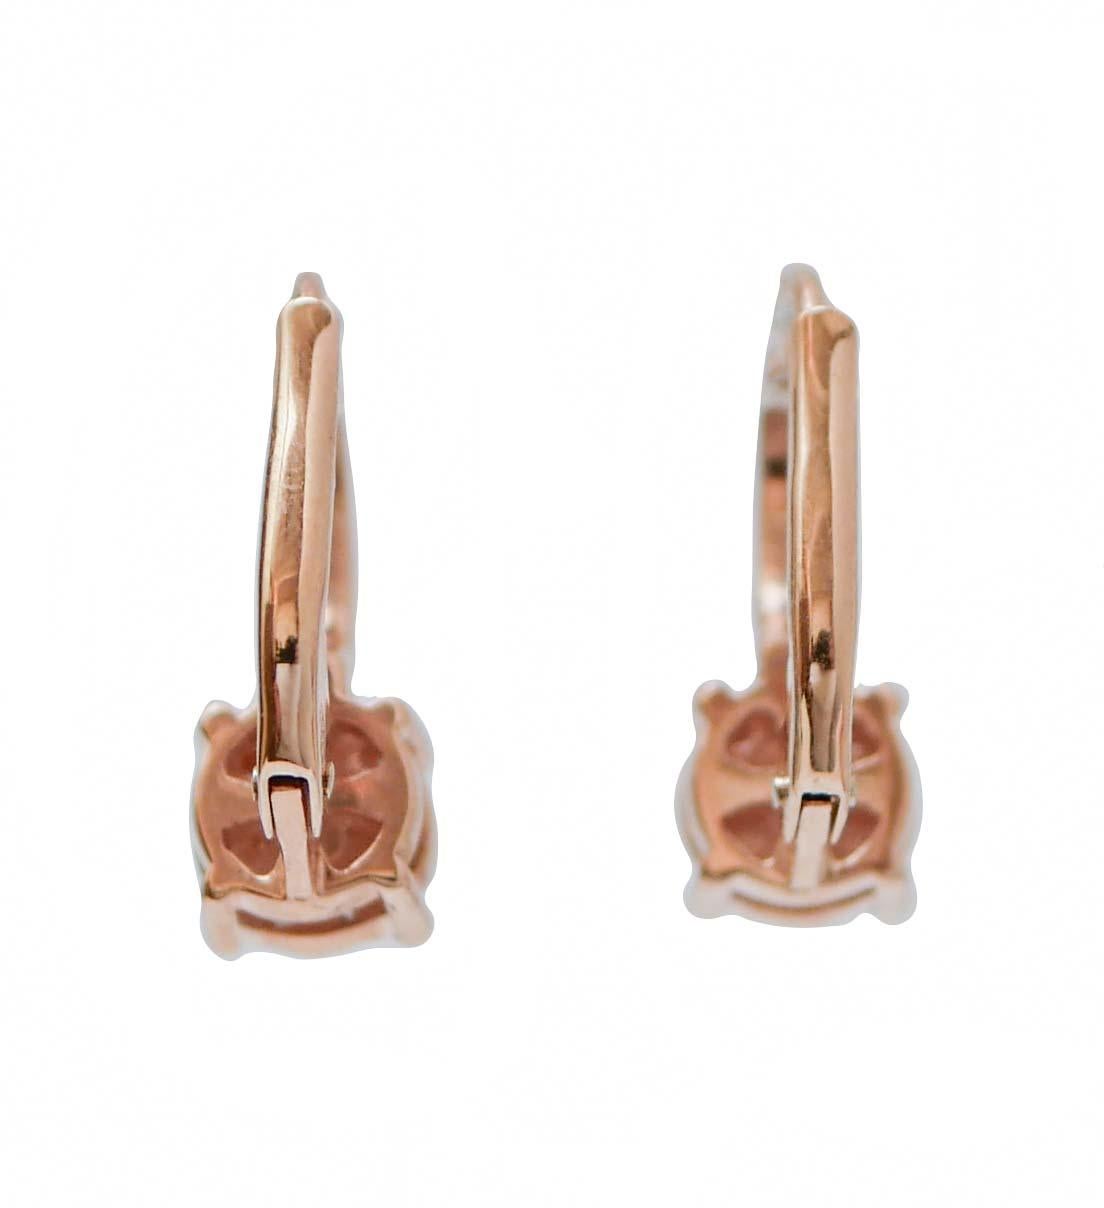 Brilliant Cut Diamonds, 18 Karat Rose Gold Modern Earrings. For Sale